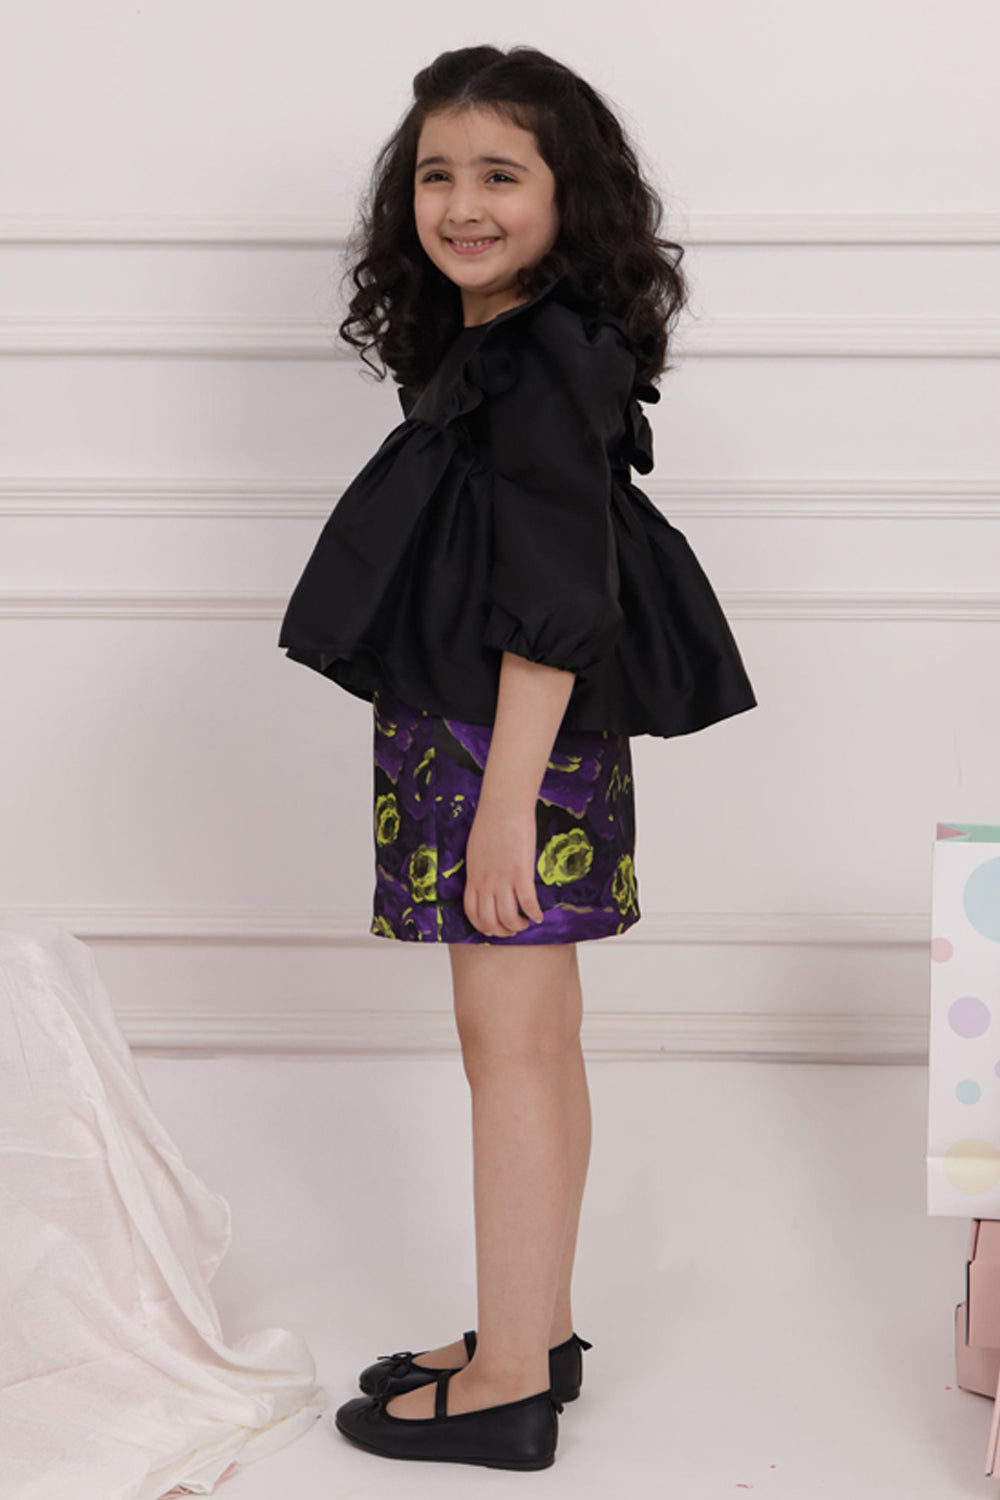 Black Ruffle Top with Short Purple Skirt